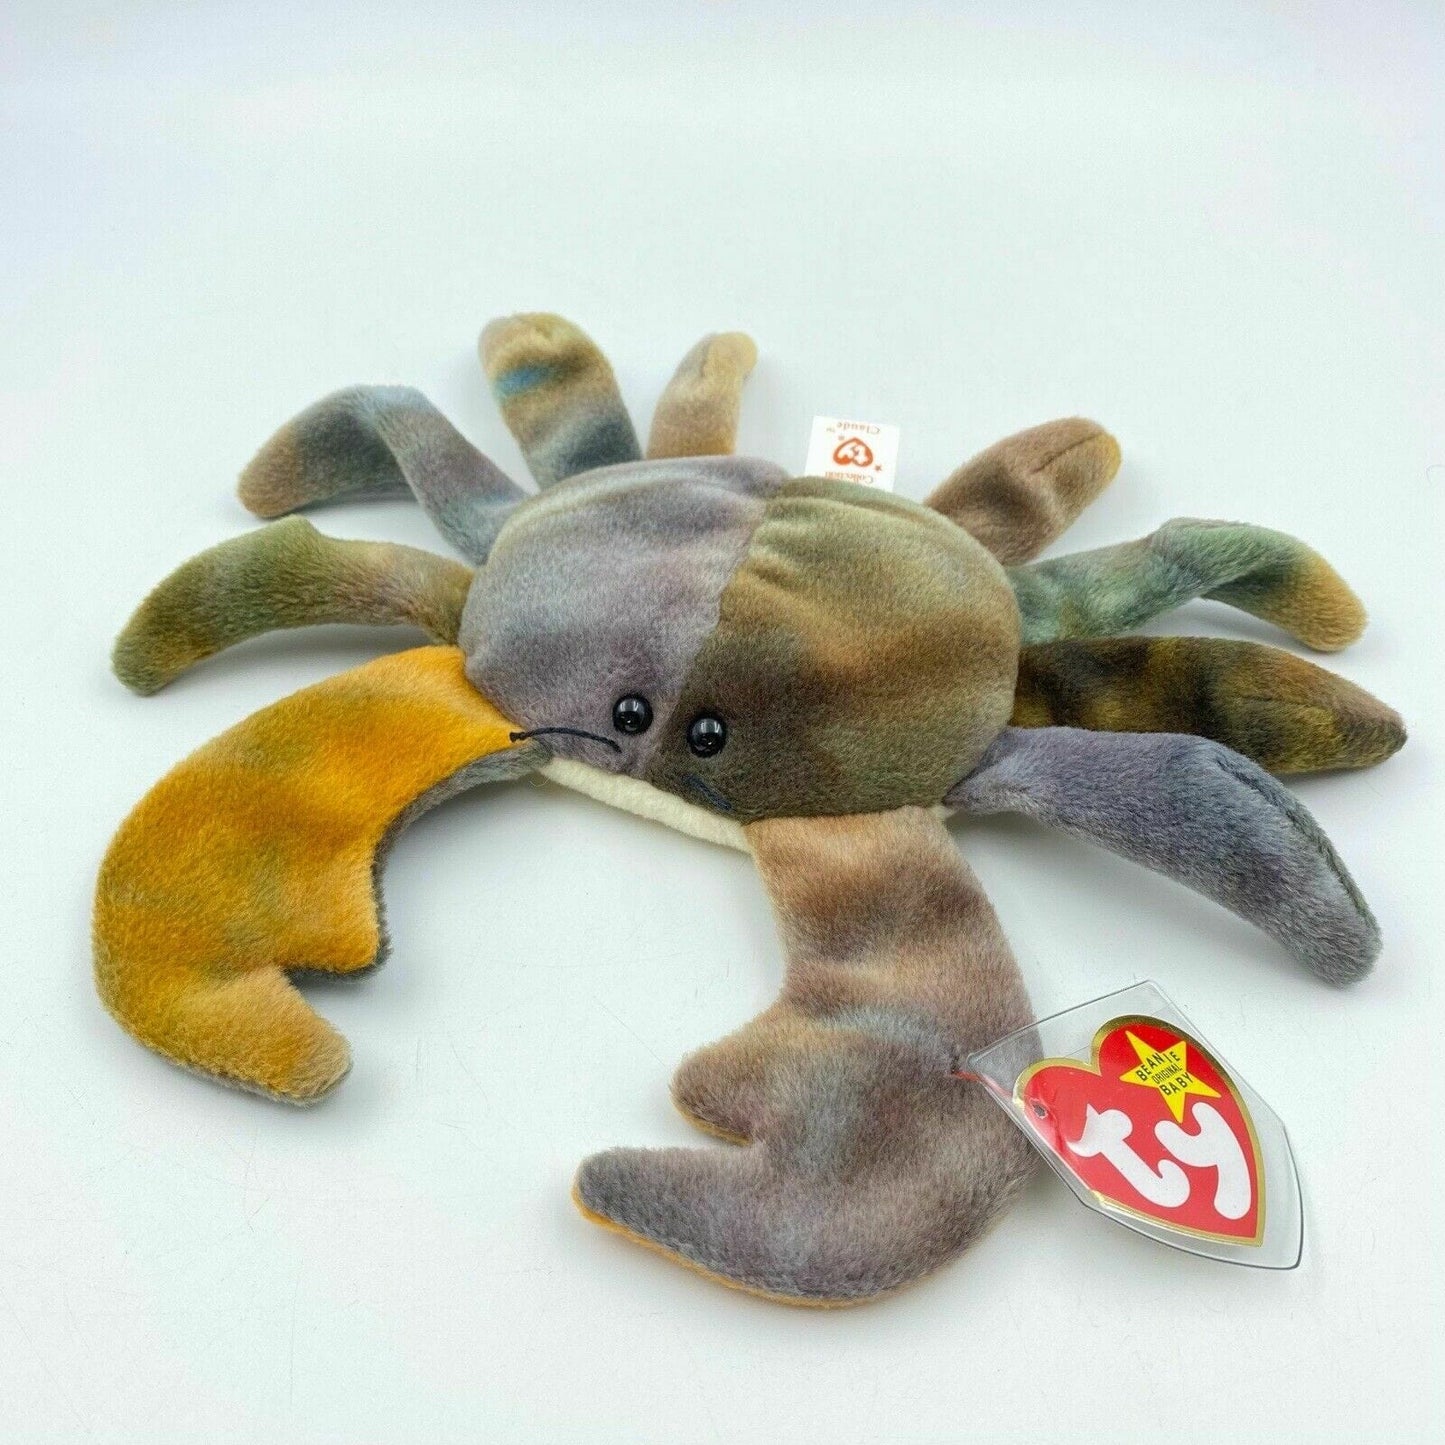 Nostalgic Ty Original Beanie Babies Claude The Crab Plush Toy - Excellent Cond. - Vintage